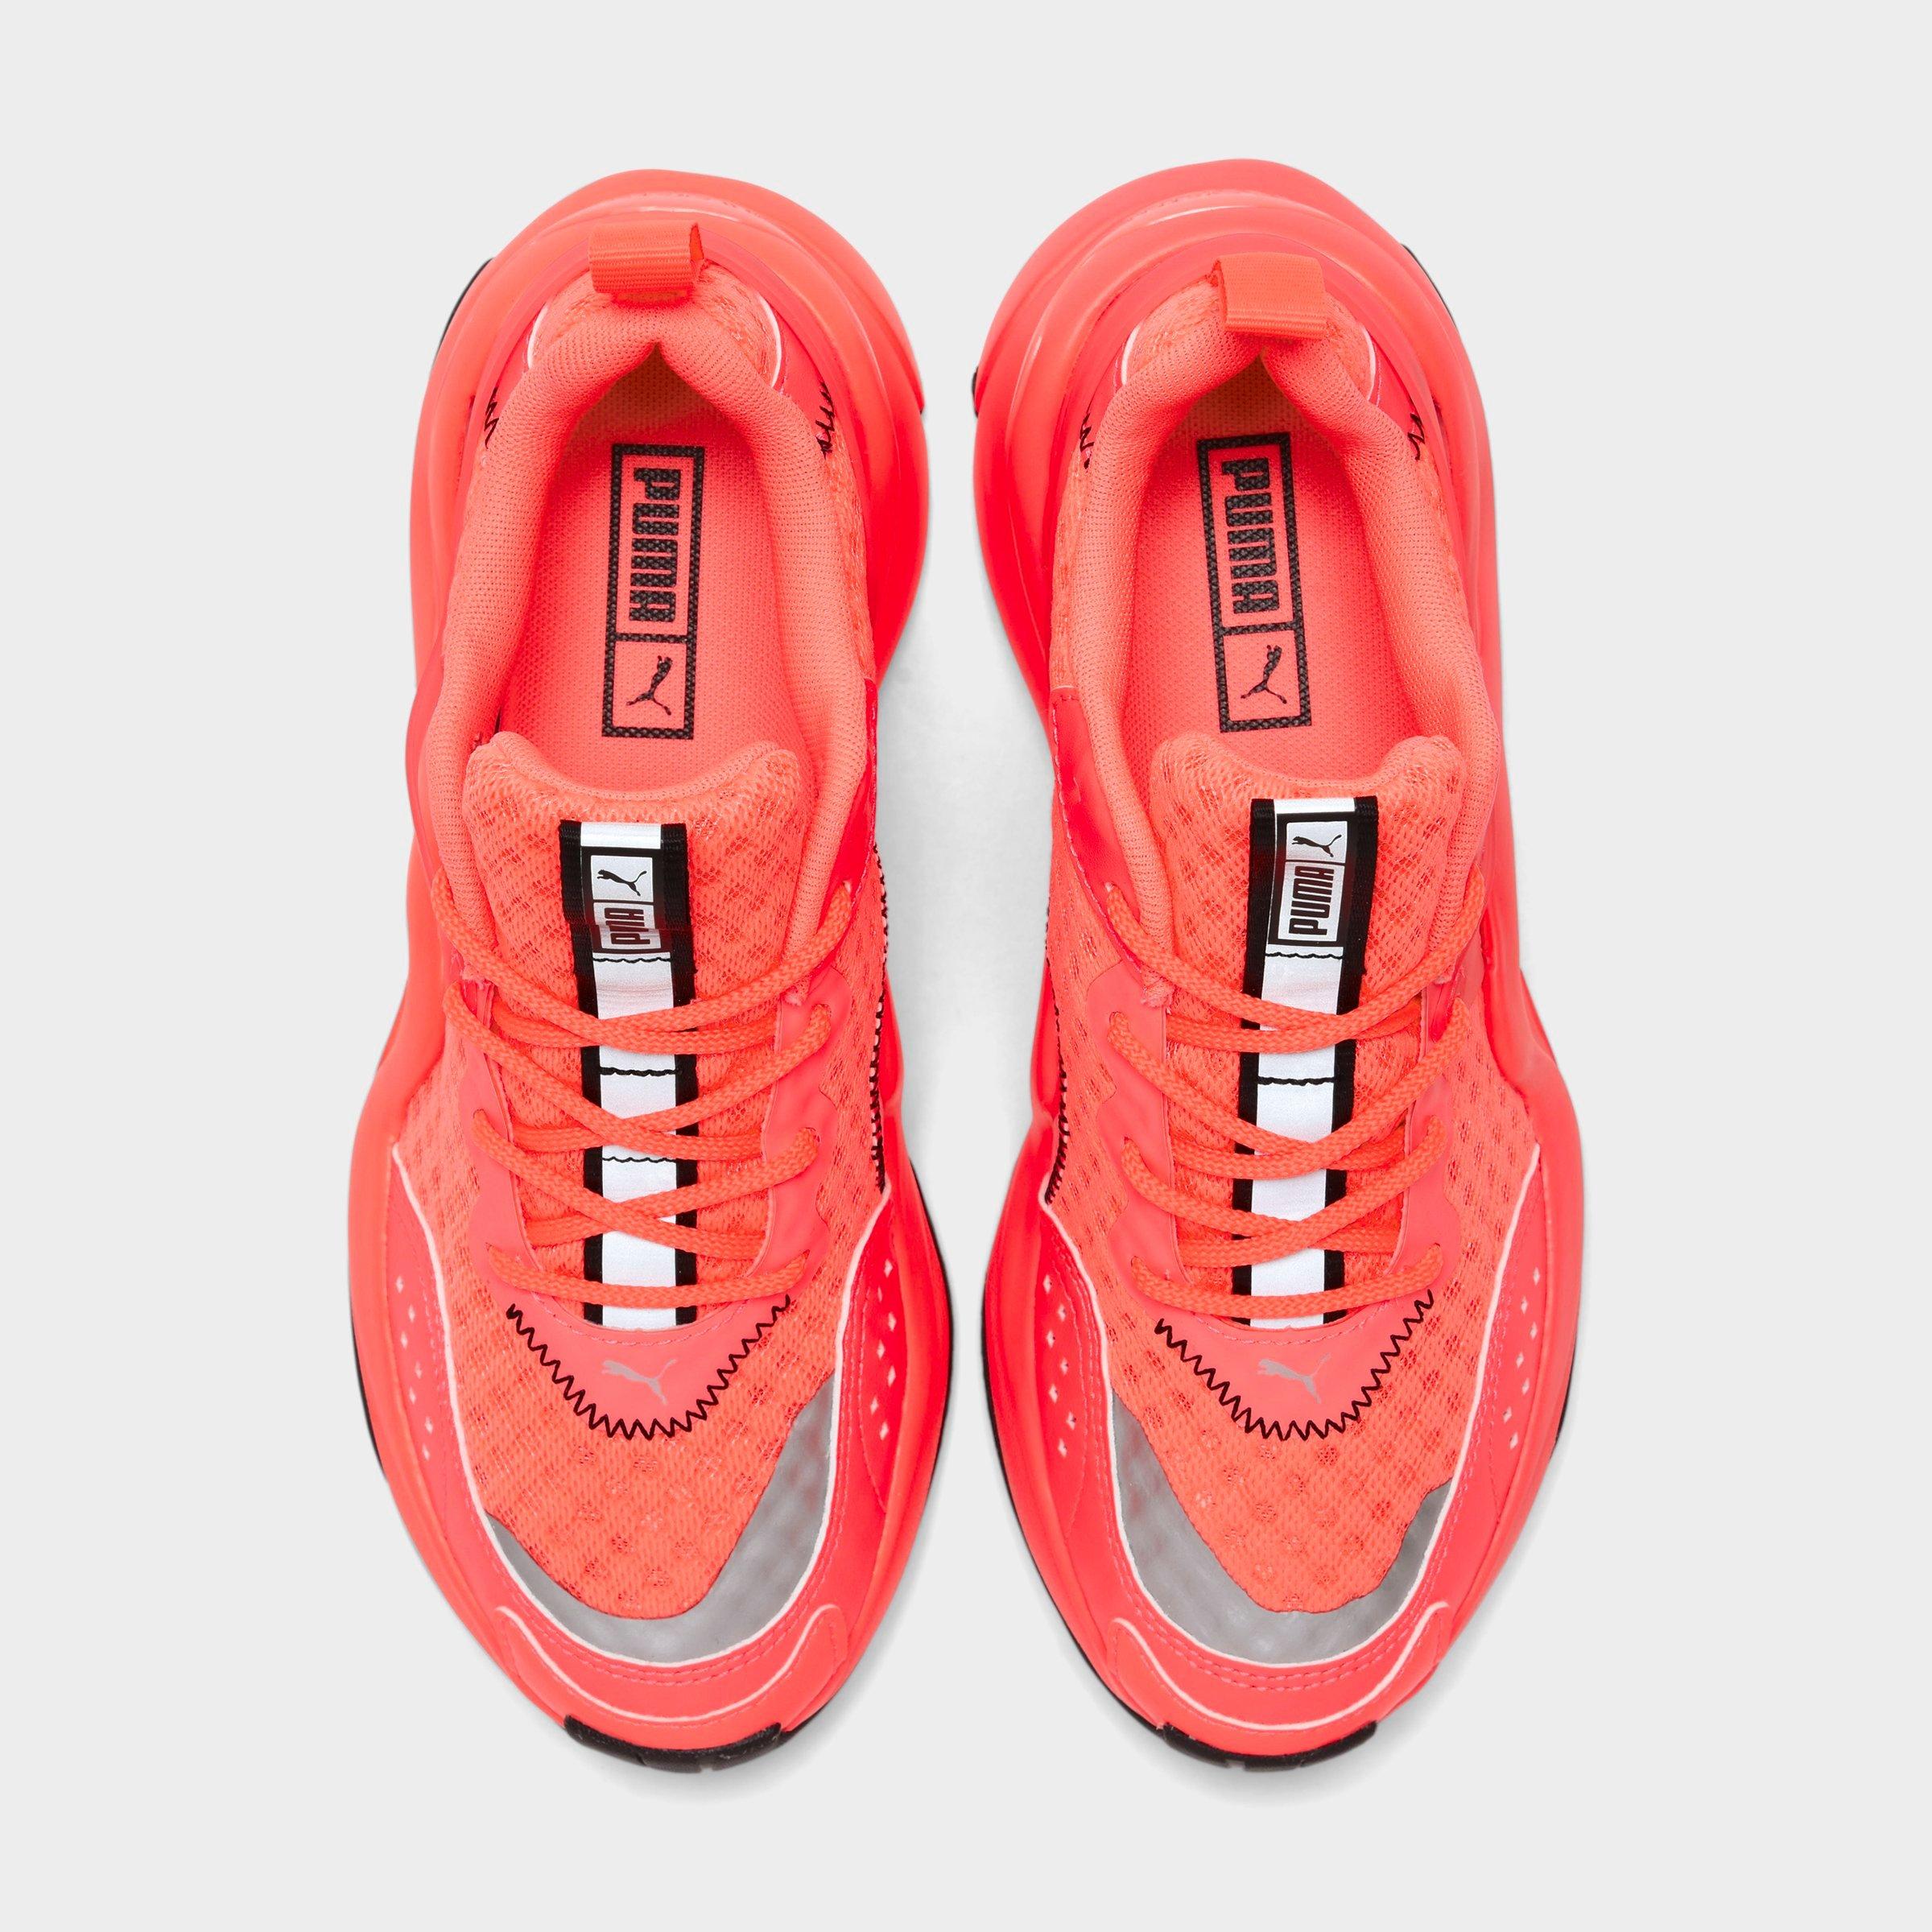 neon orange puma shoes